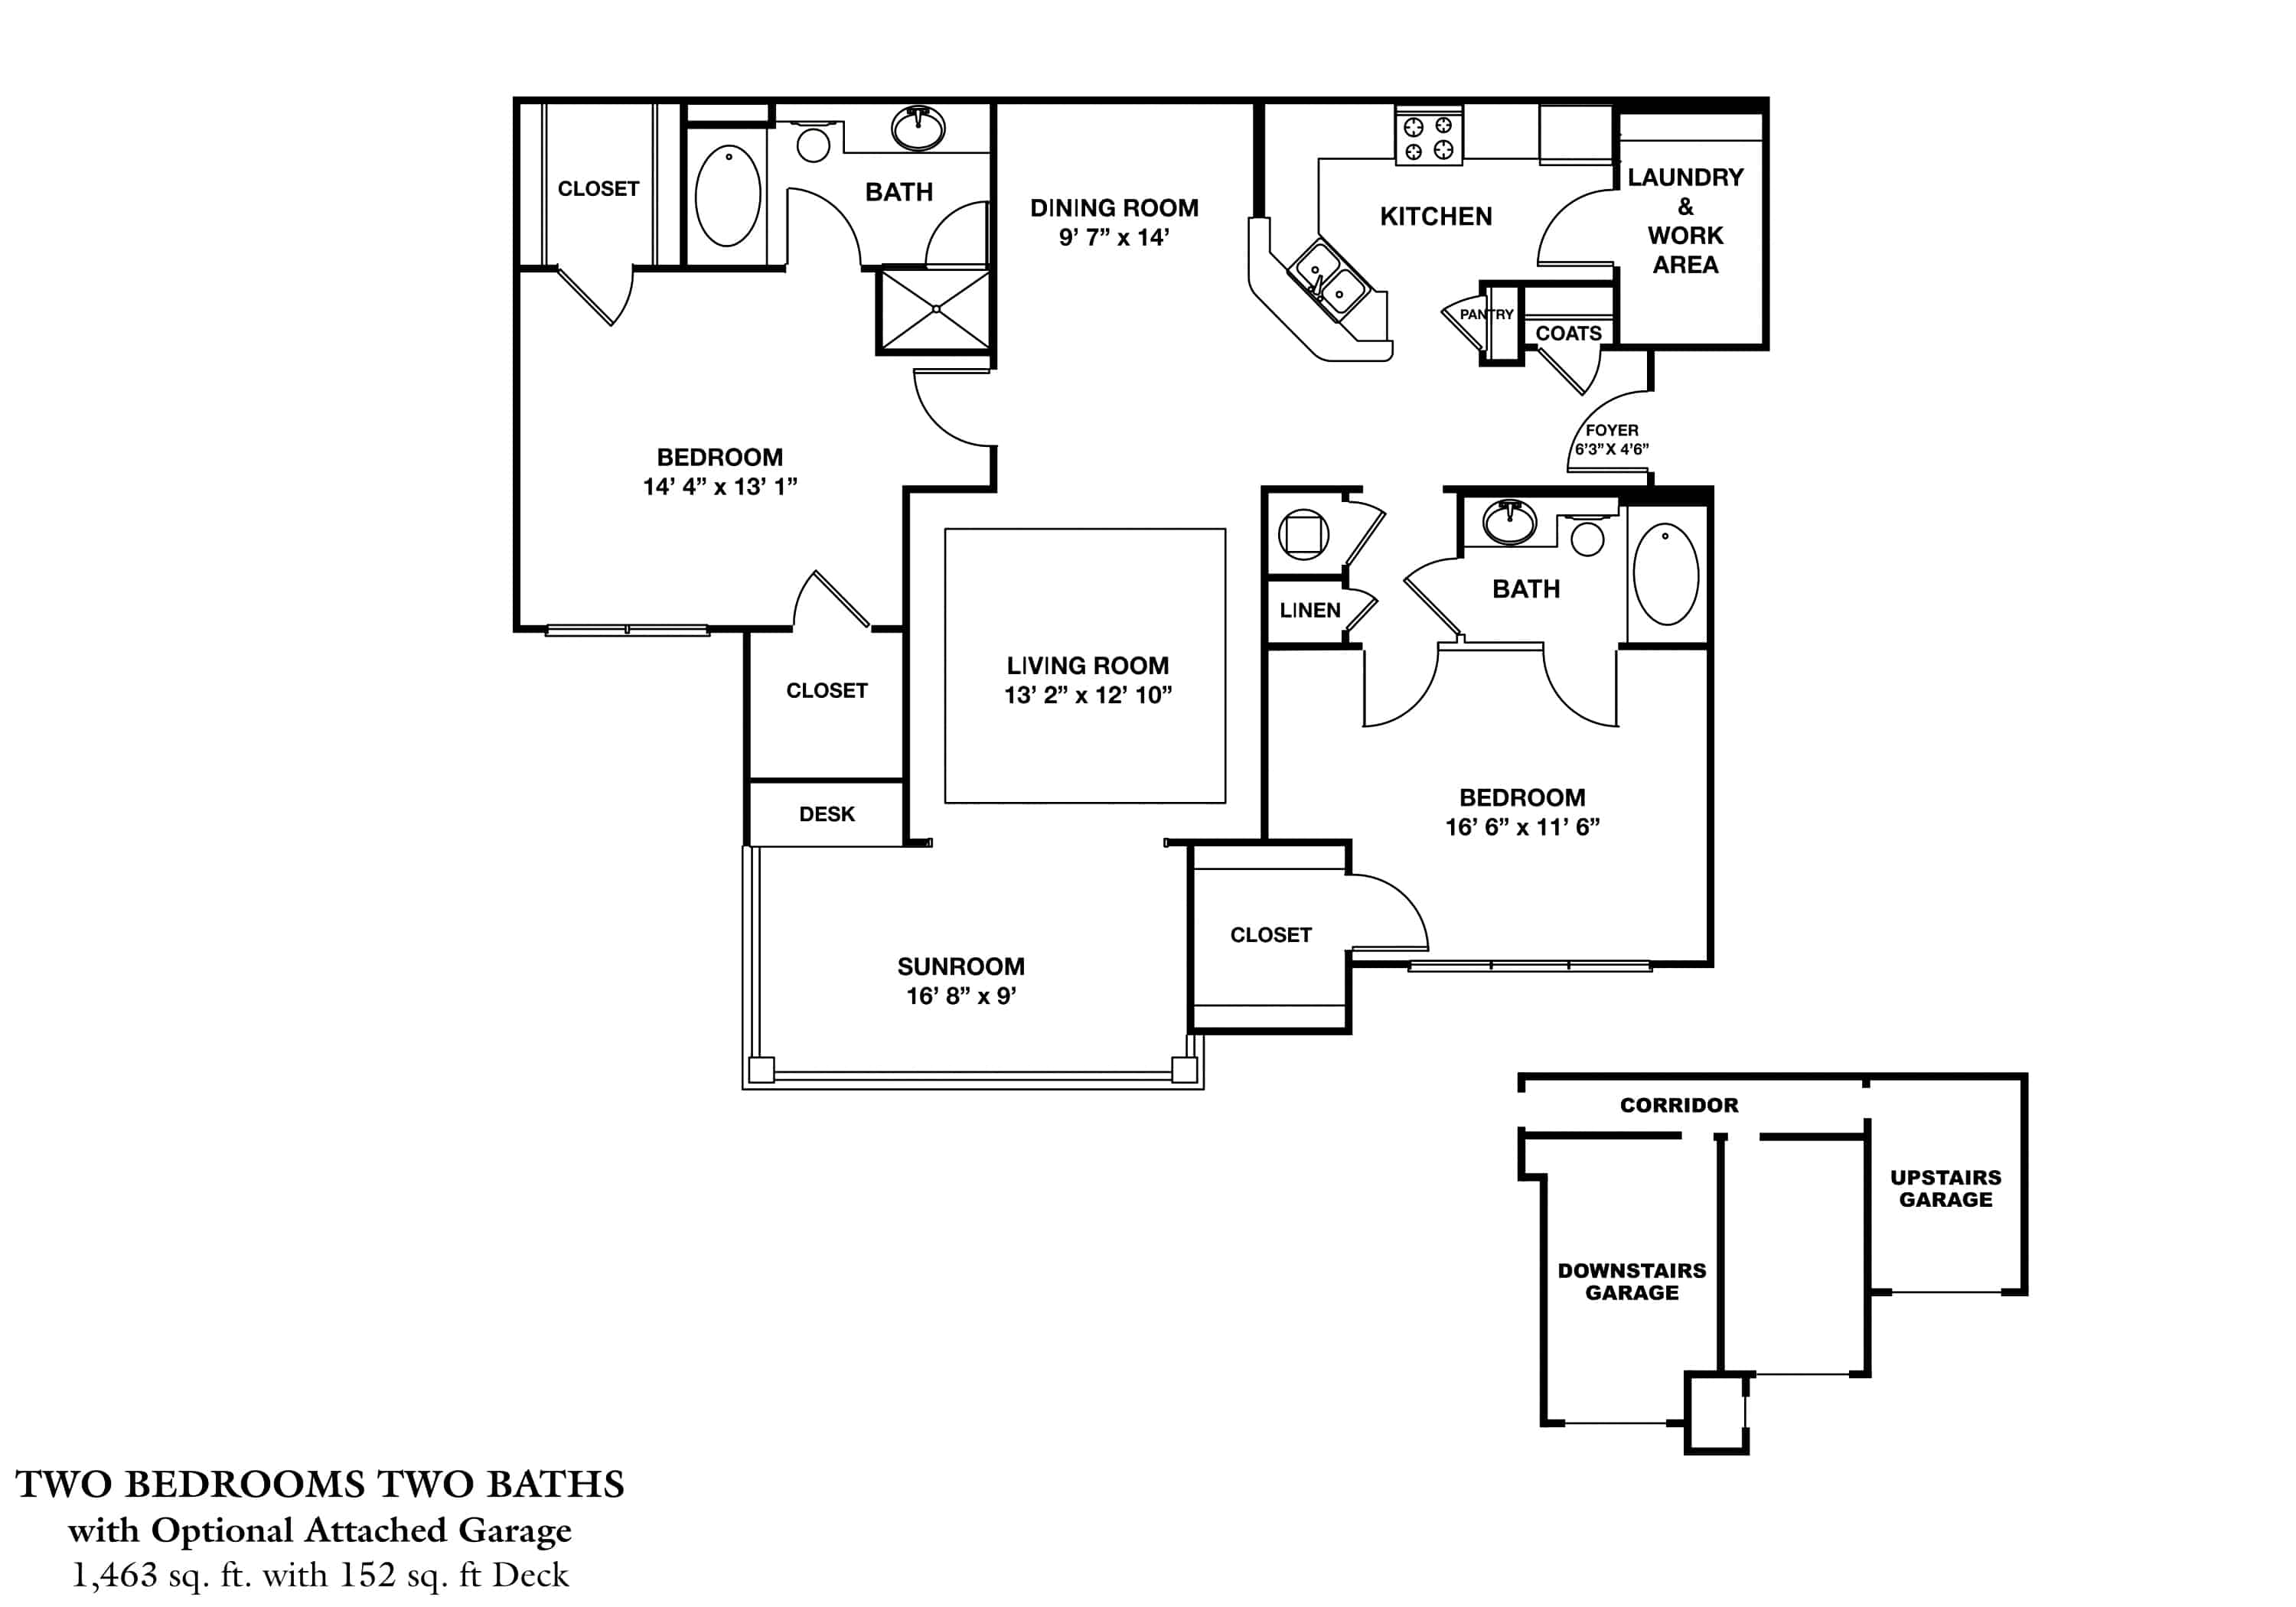 2 bedroom BSR plan at Greystone Falls Corporate Stay Columbus, GA